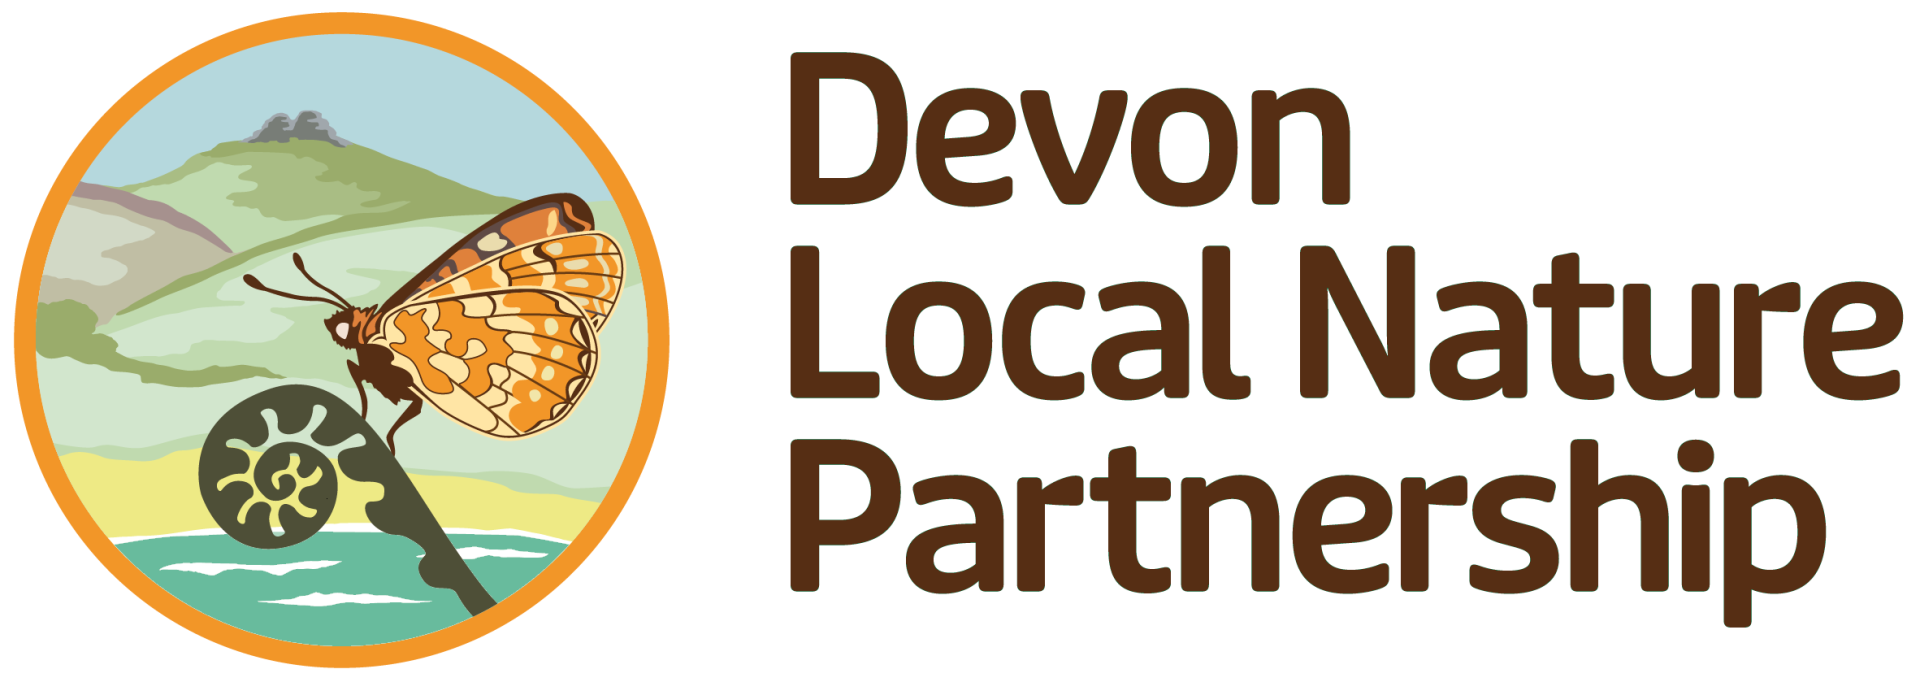 Devon Local Nature Partnership logo